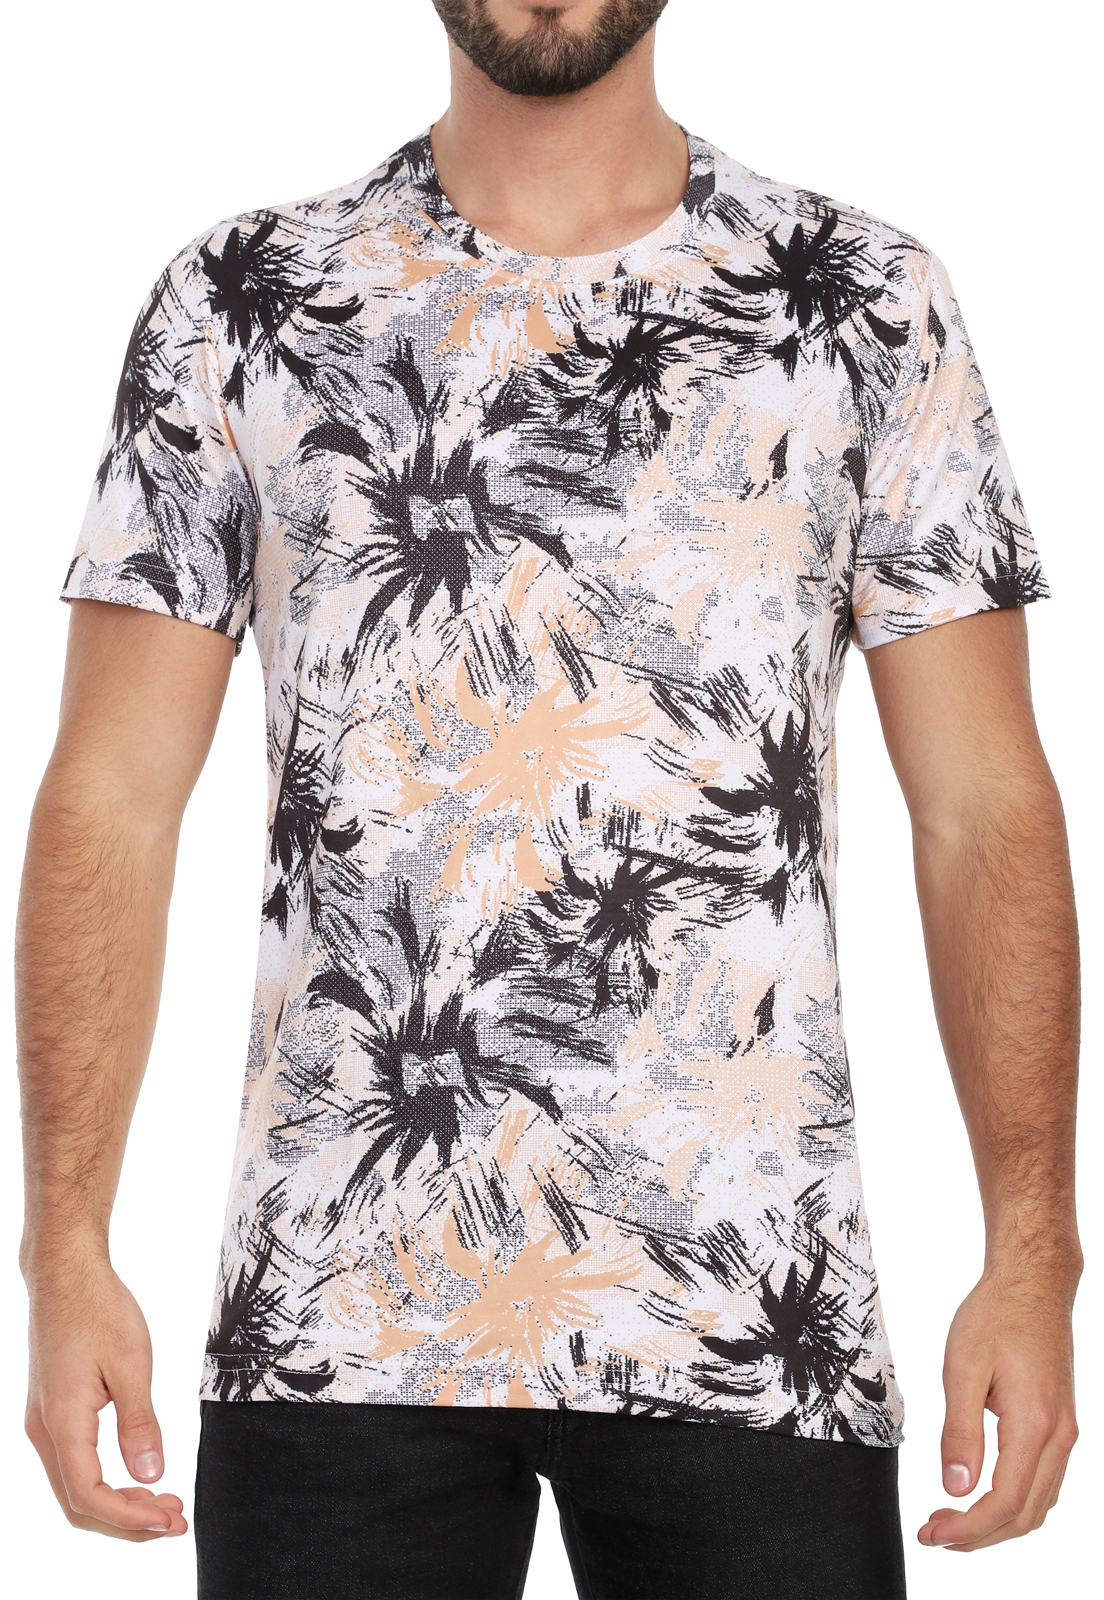 T-shirt para hombre sublimada ramas blanca, negra y beige - Rachid Style